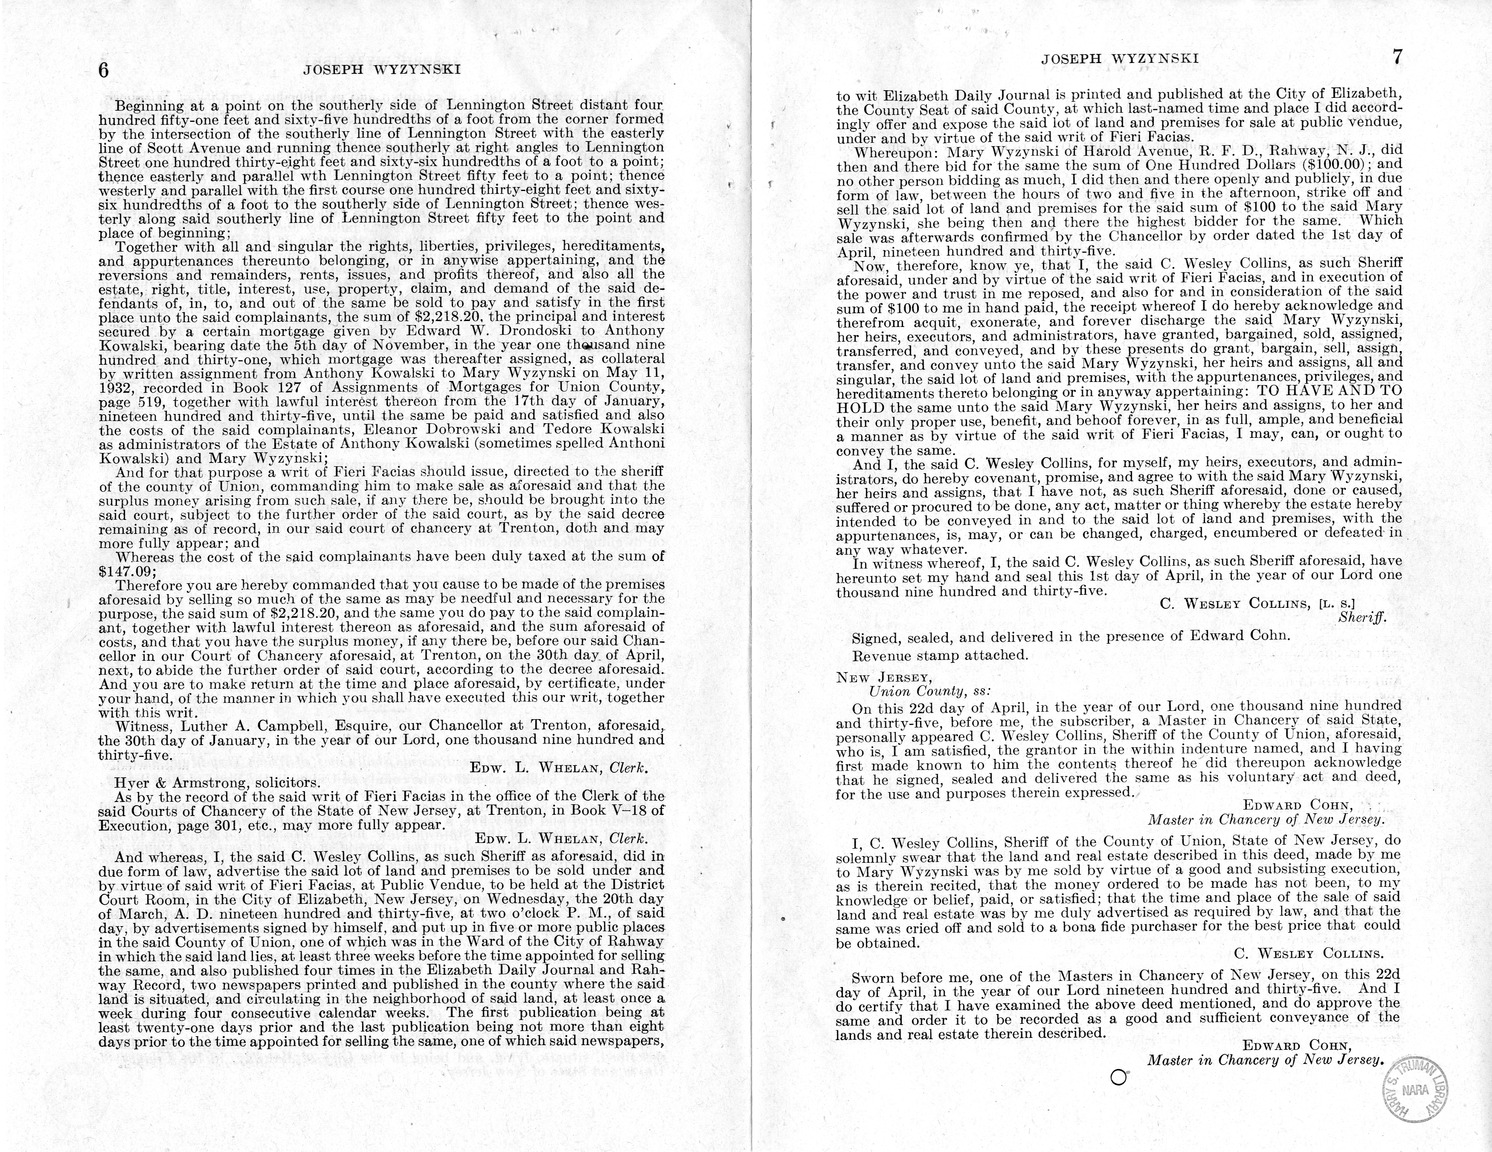 Memorandum from Frederick J. Bailey to M. C. Latta, H.R. 2002, For the Relief of Joseph Wyzynski, with Attachments